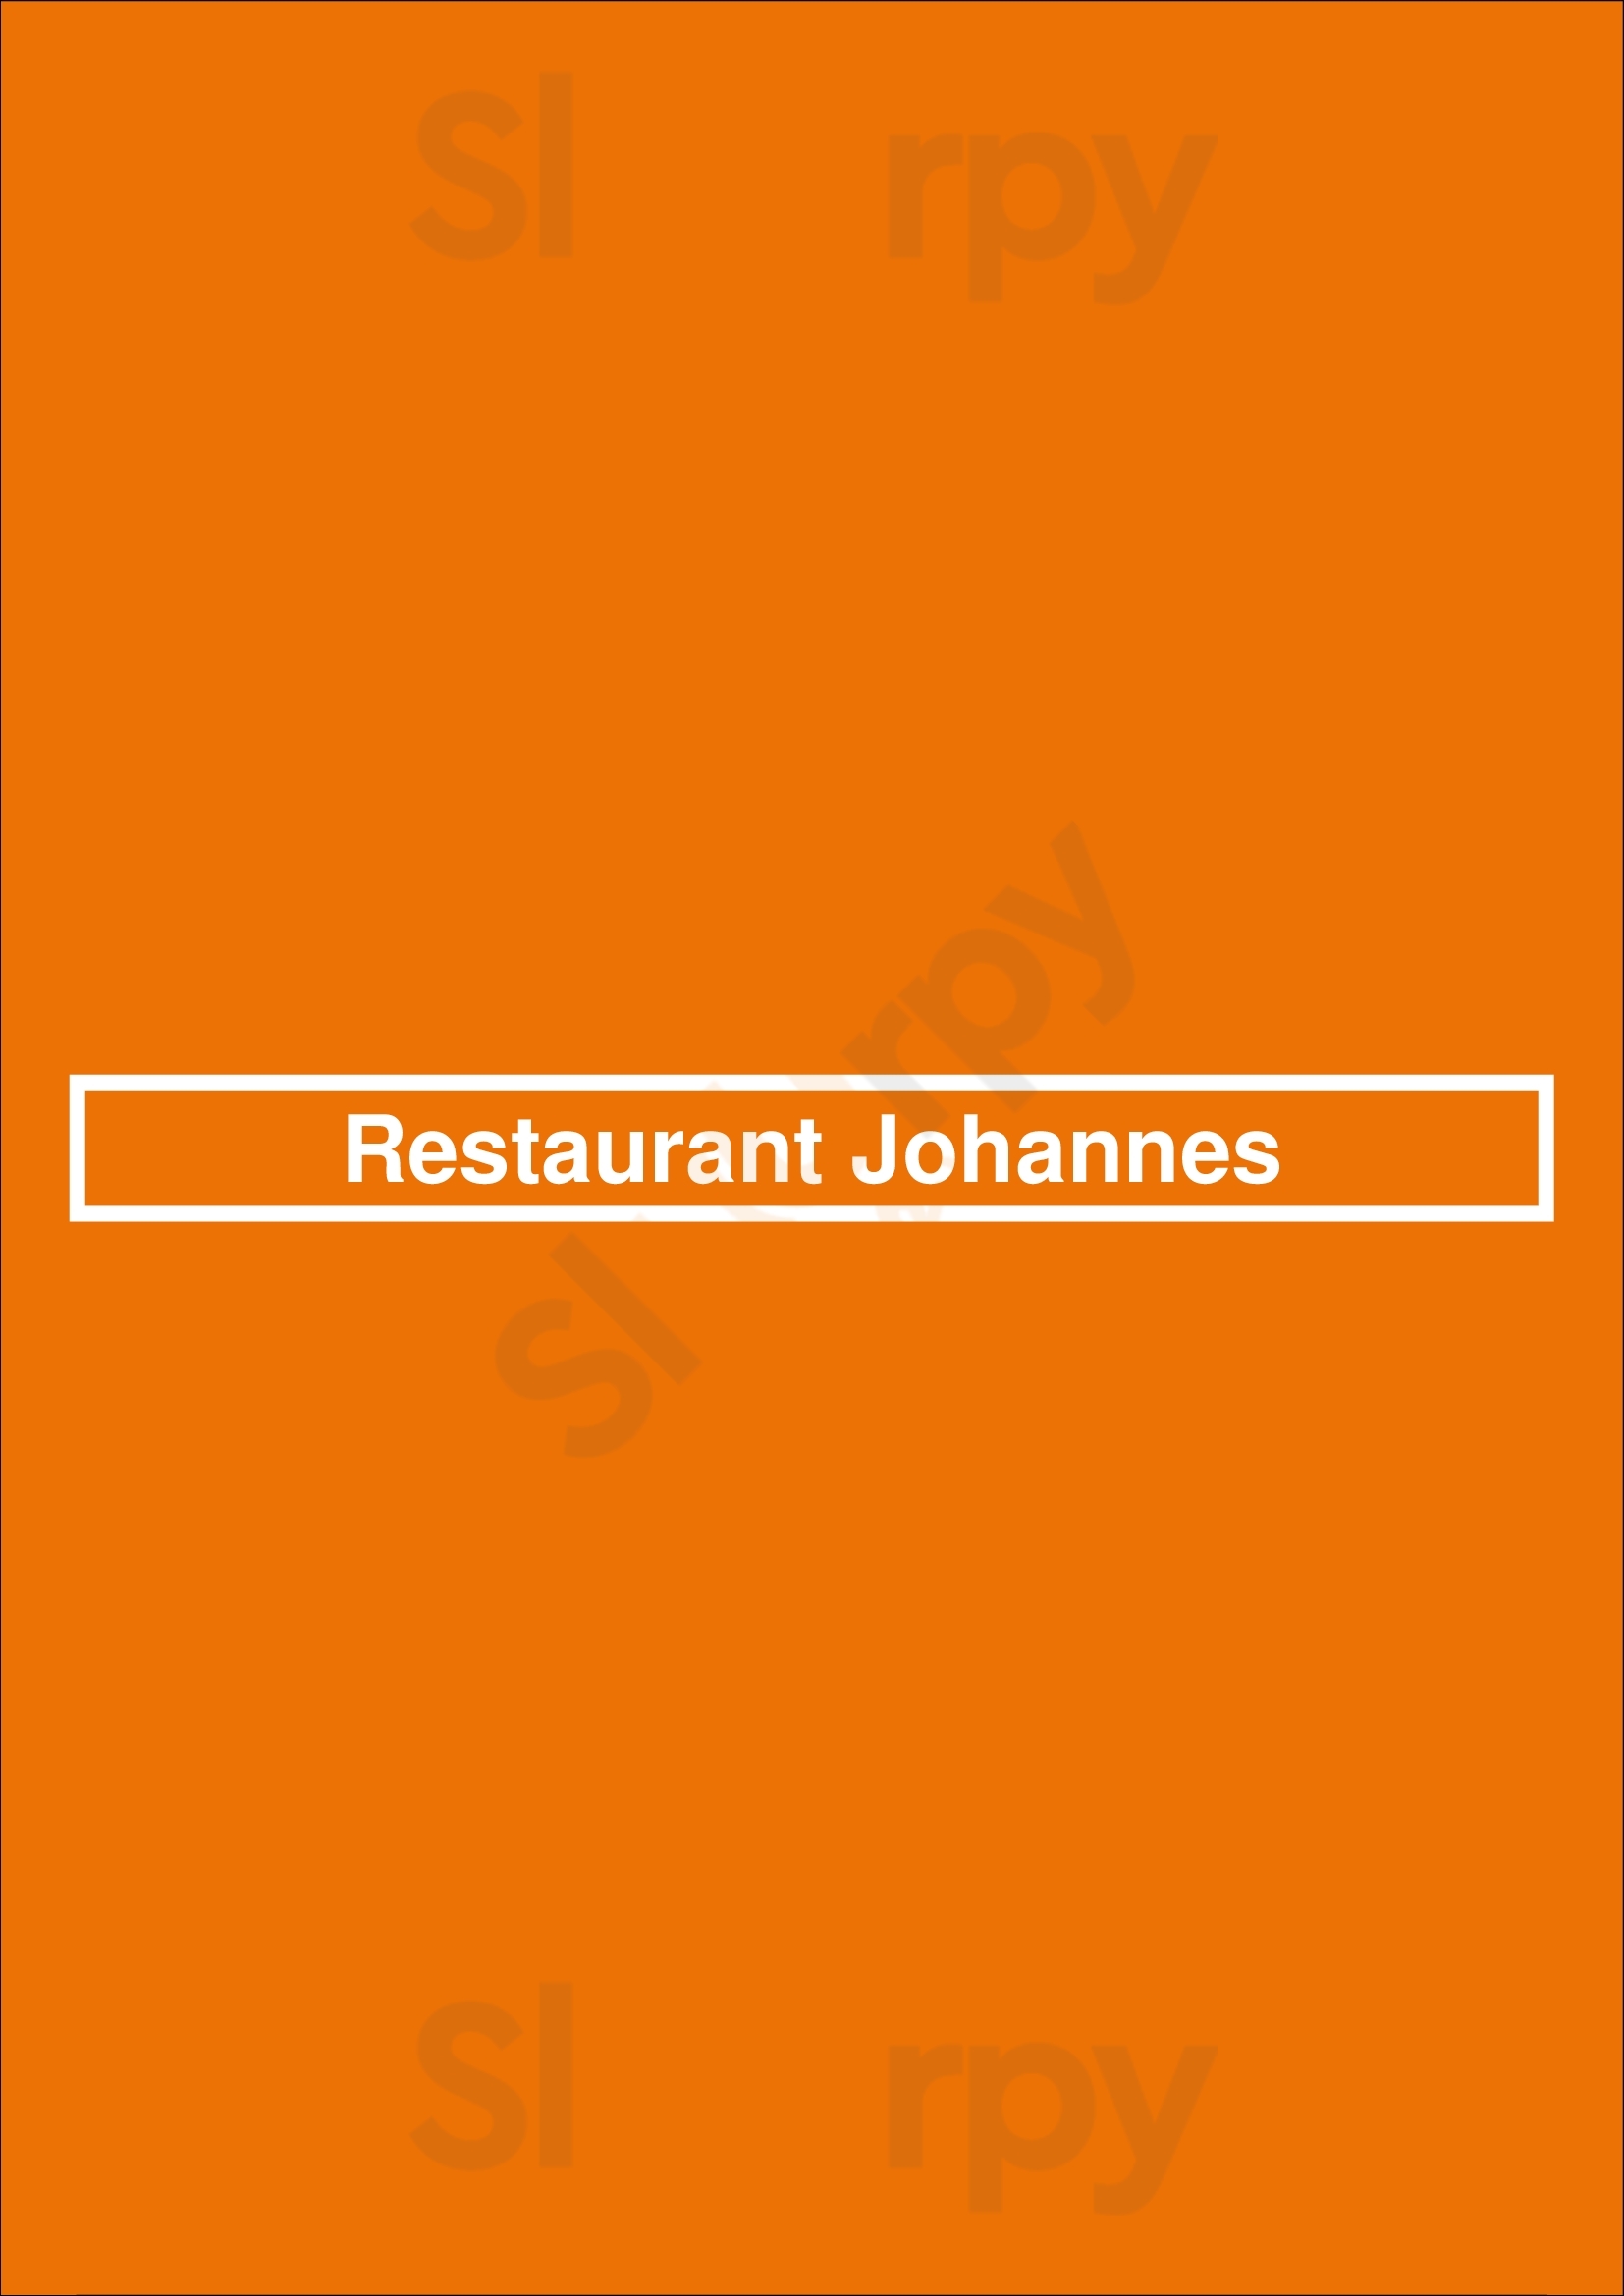 Restaurant Johannes Harderwijk Menu - 1